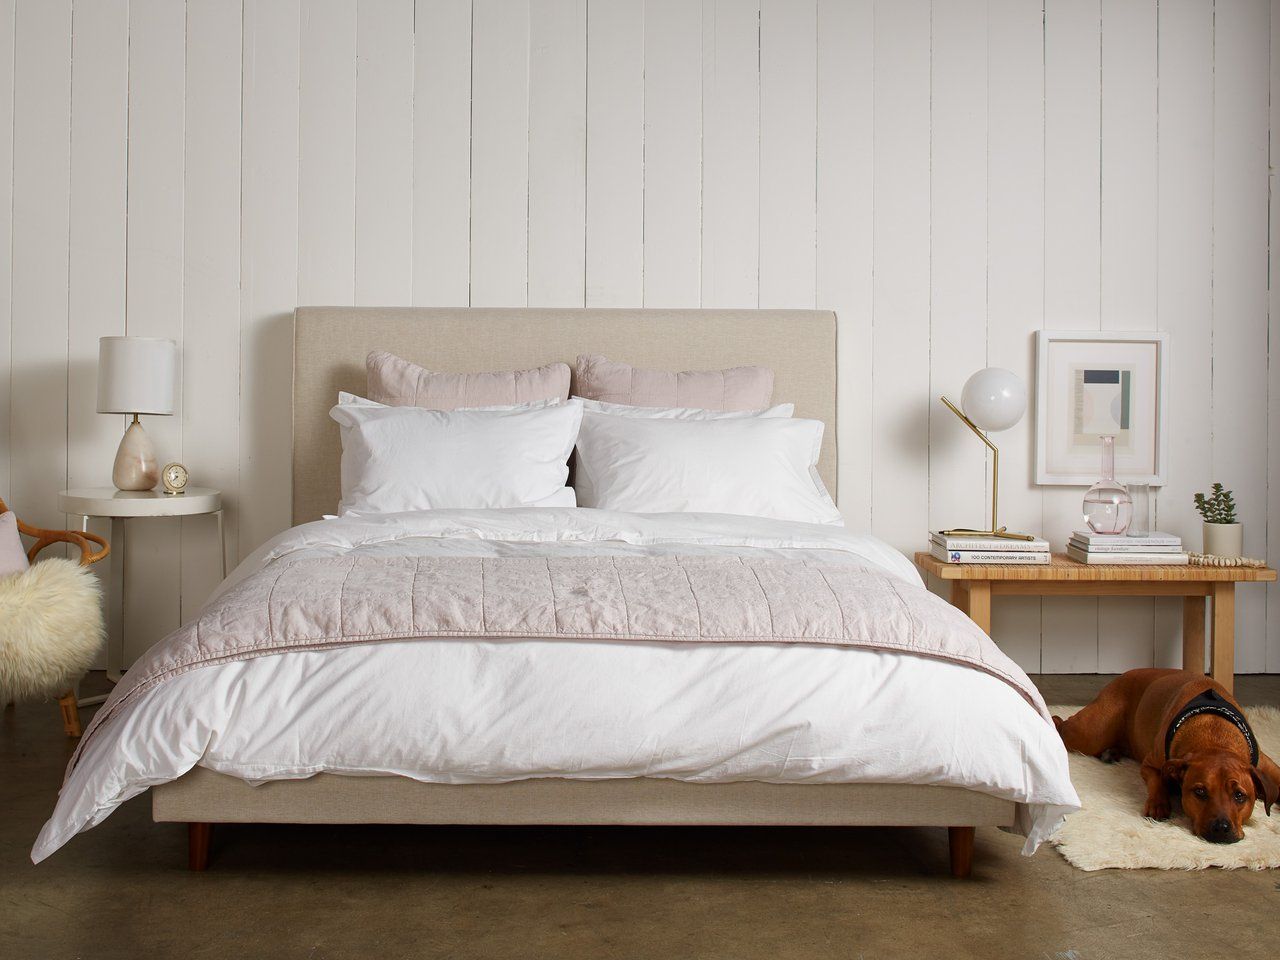 Design for Bed Linen pattern